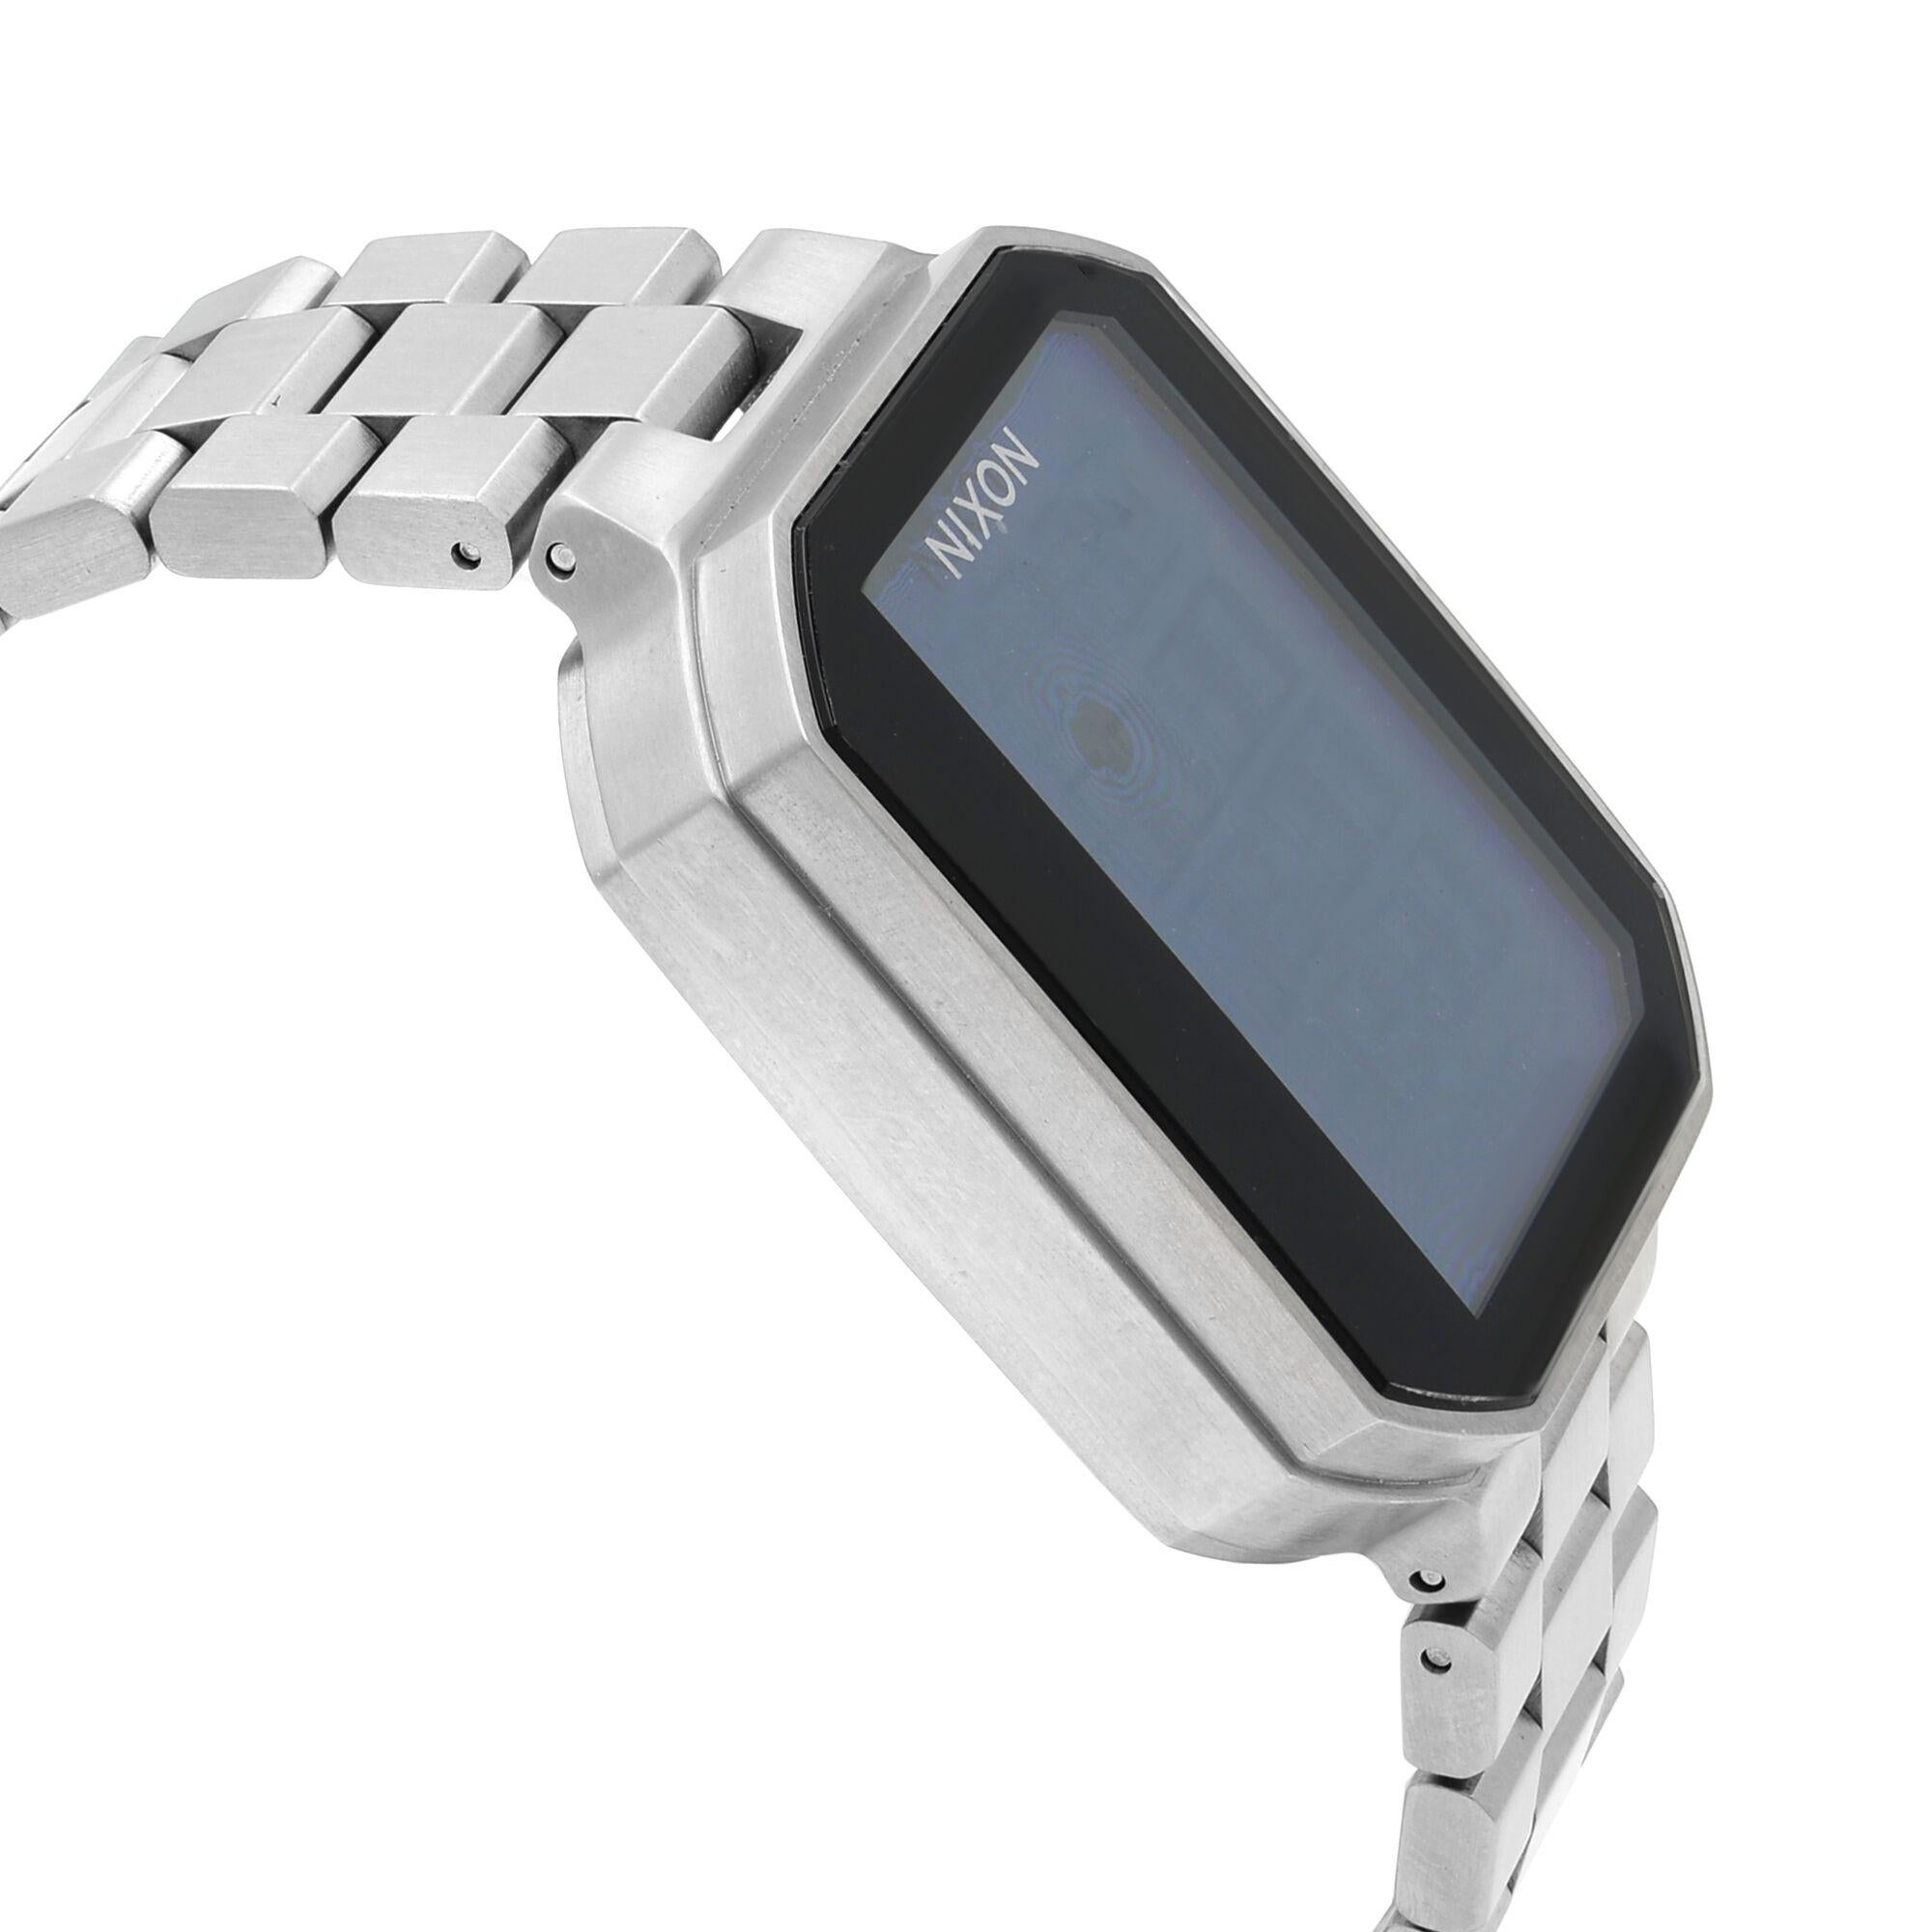 Nixon Synapse Sensor Digital Steel Quartz Men's Watch A323-000